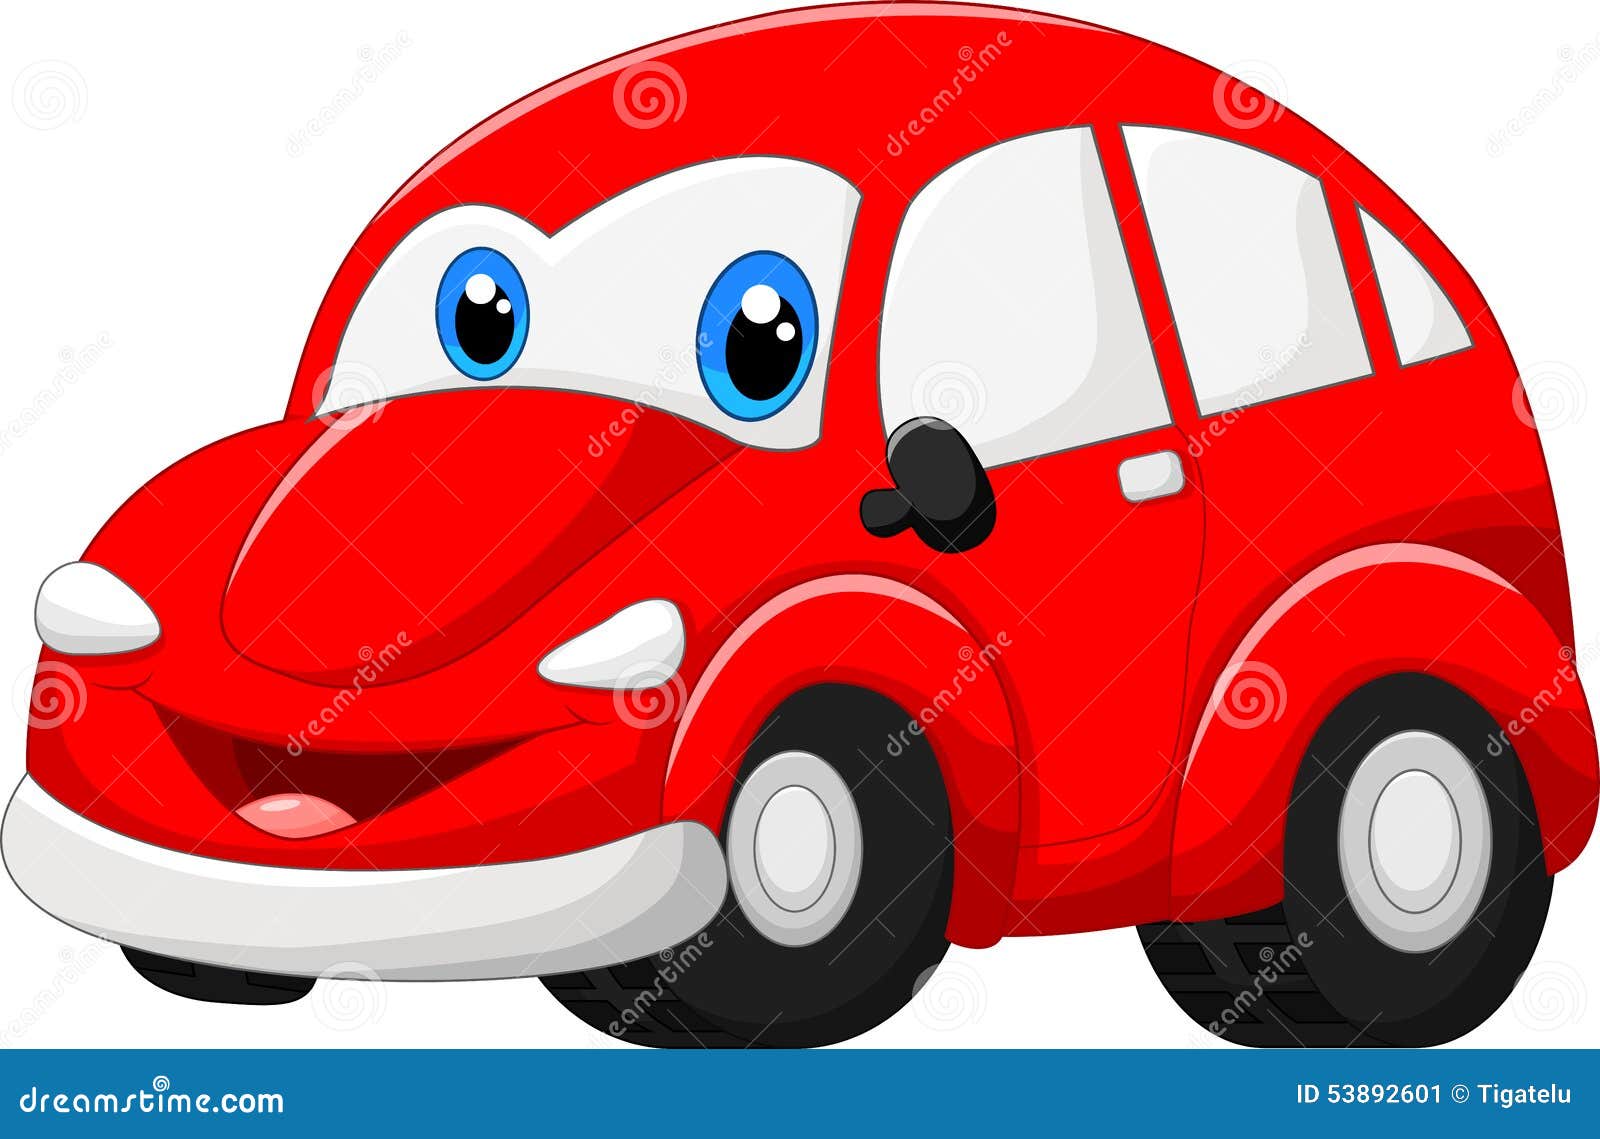 Cartoon Red Car Stock Vector - Image: 53892601